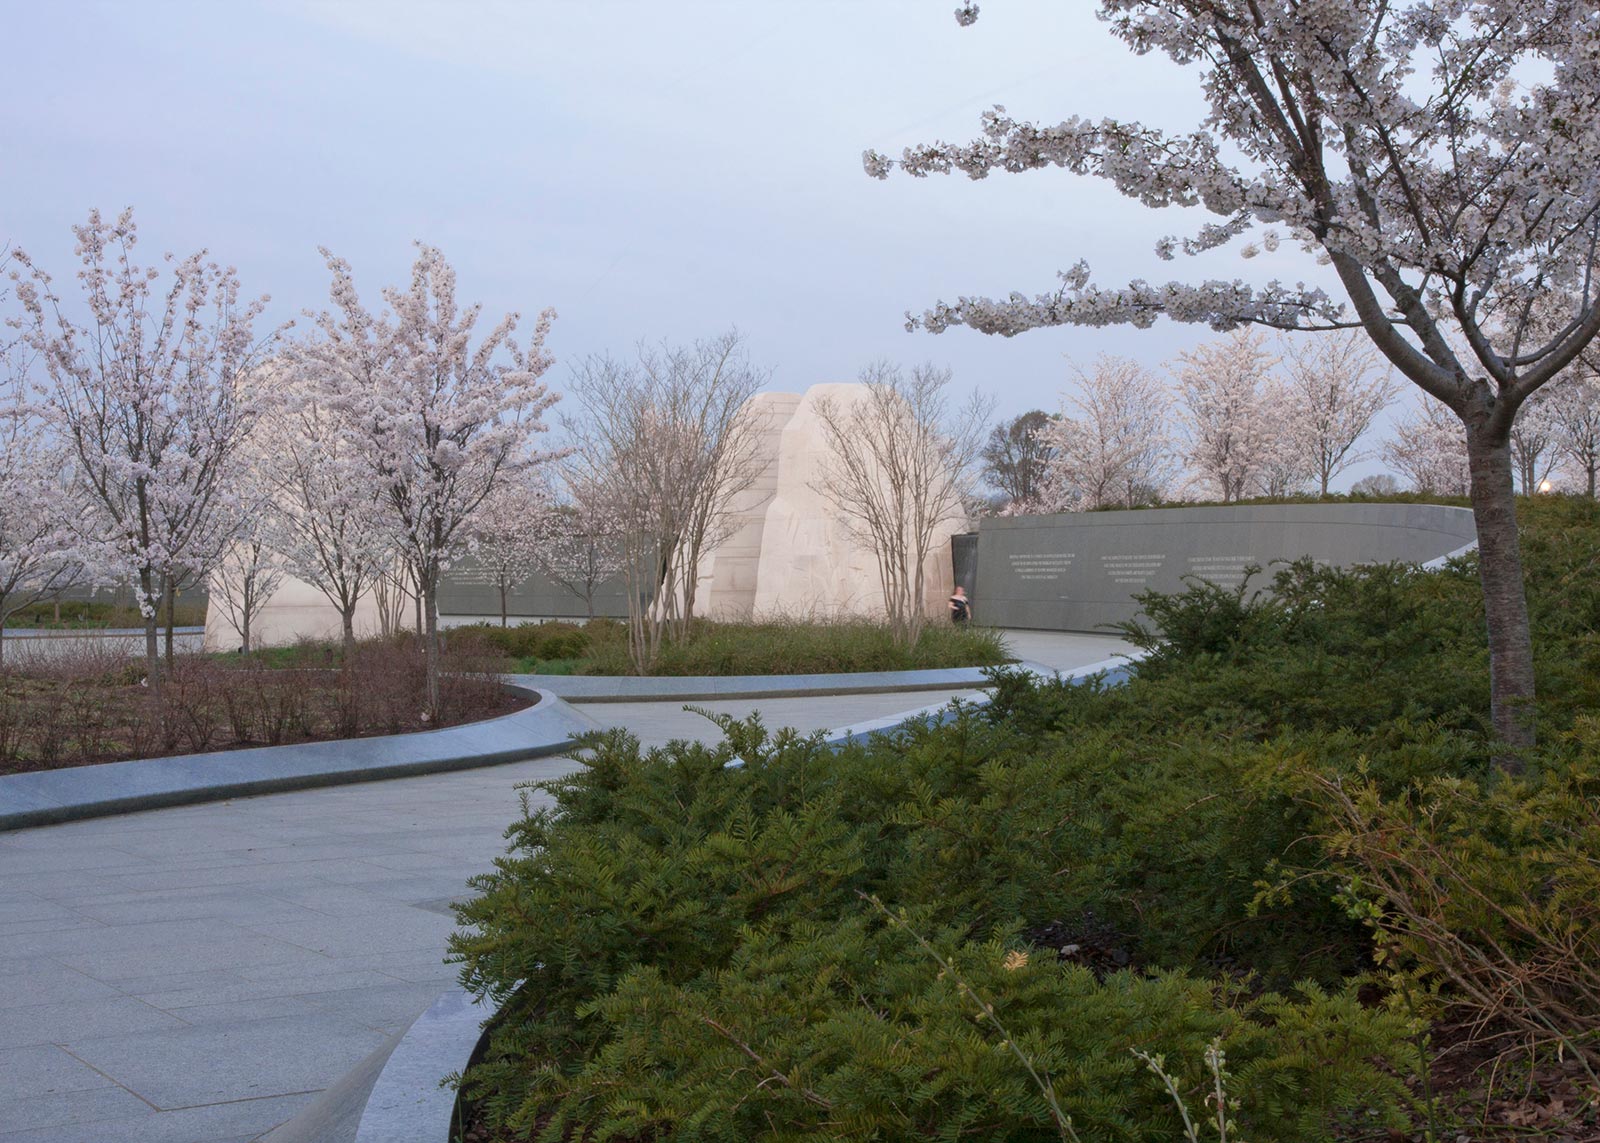 Martin Luther King, Jr. National Memorial 2